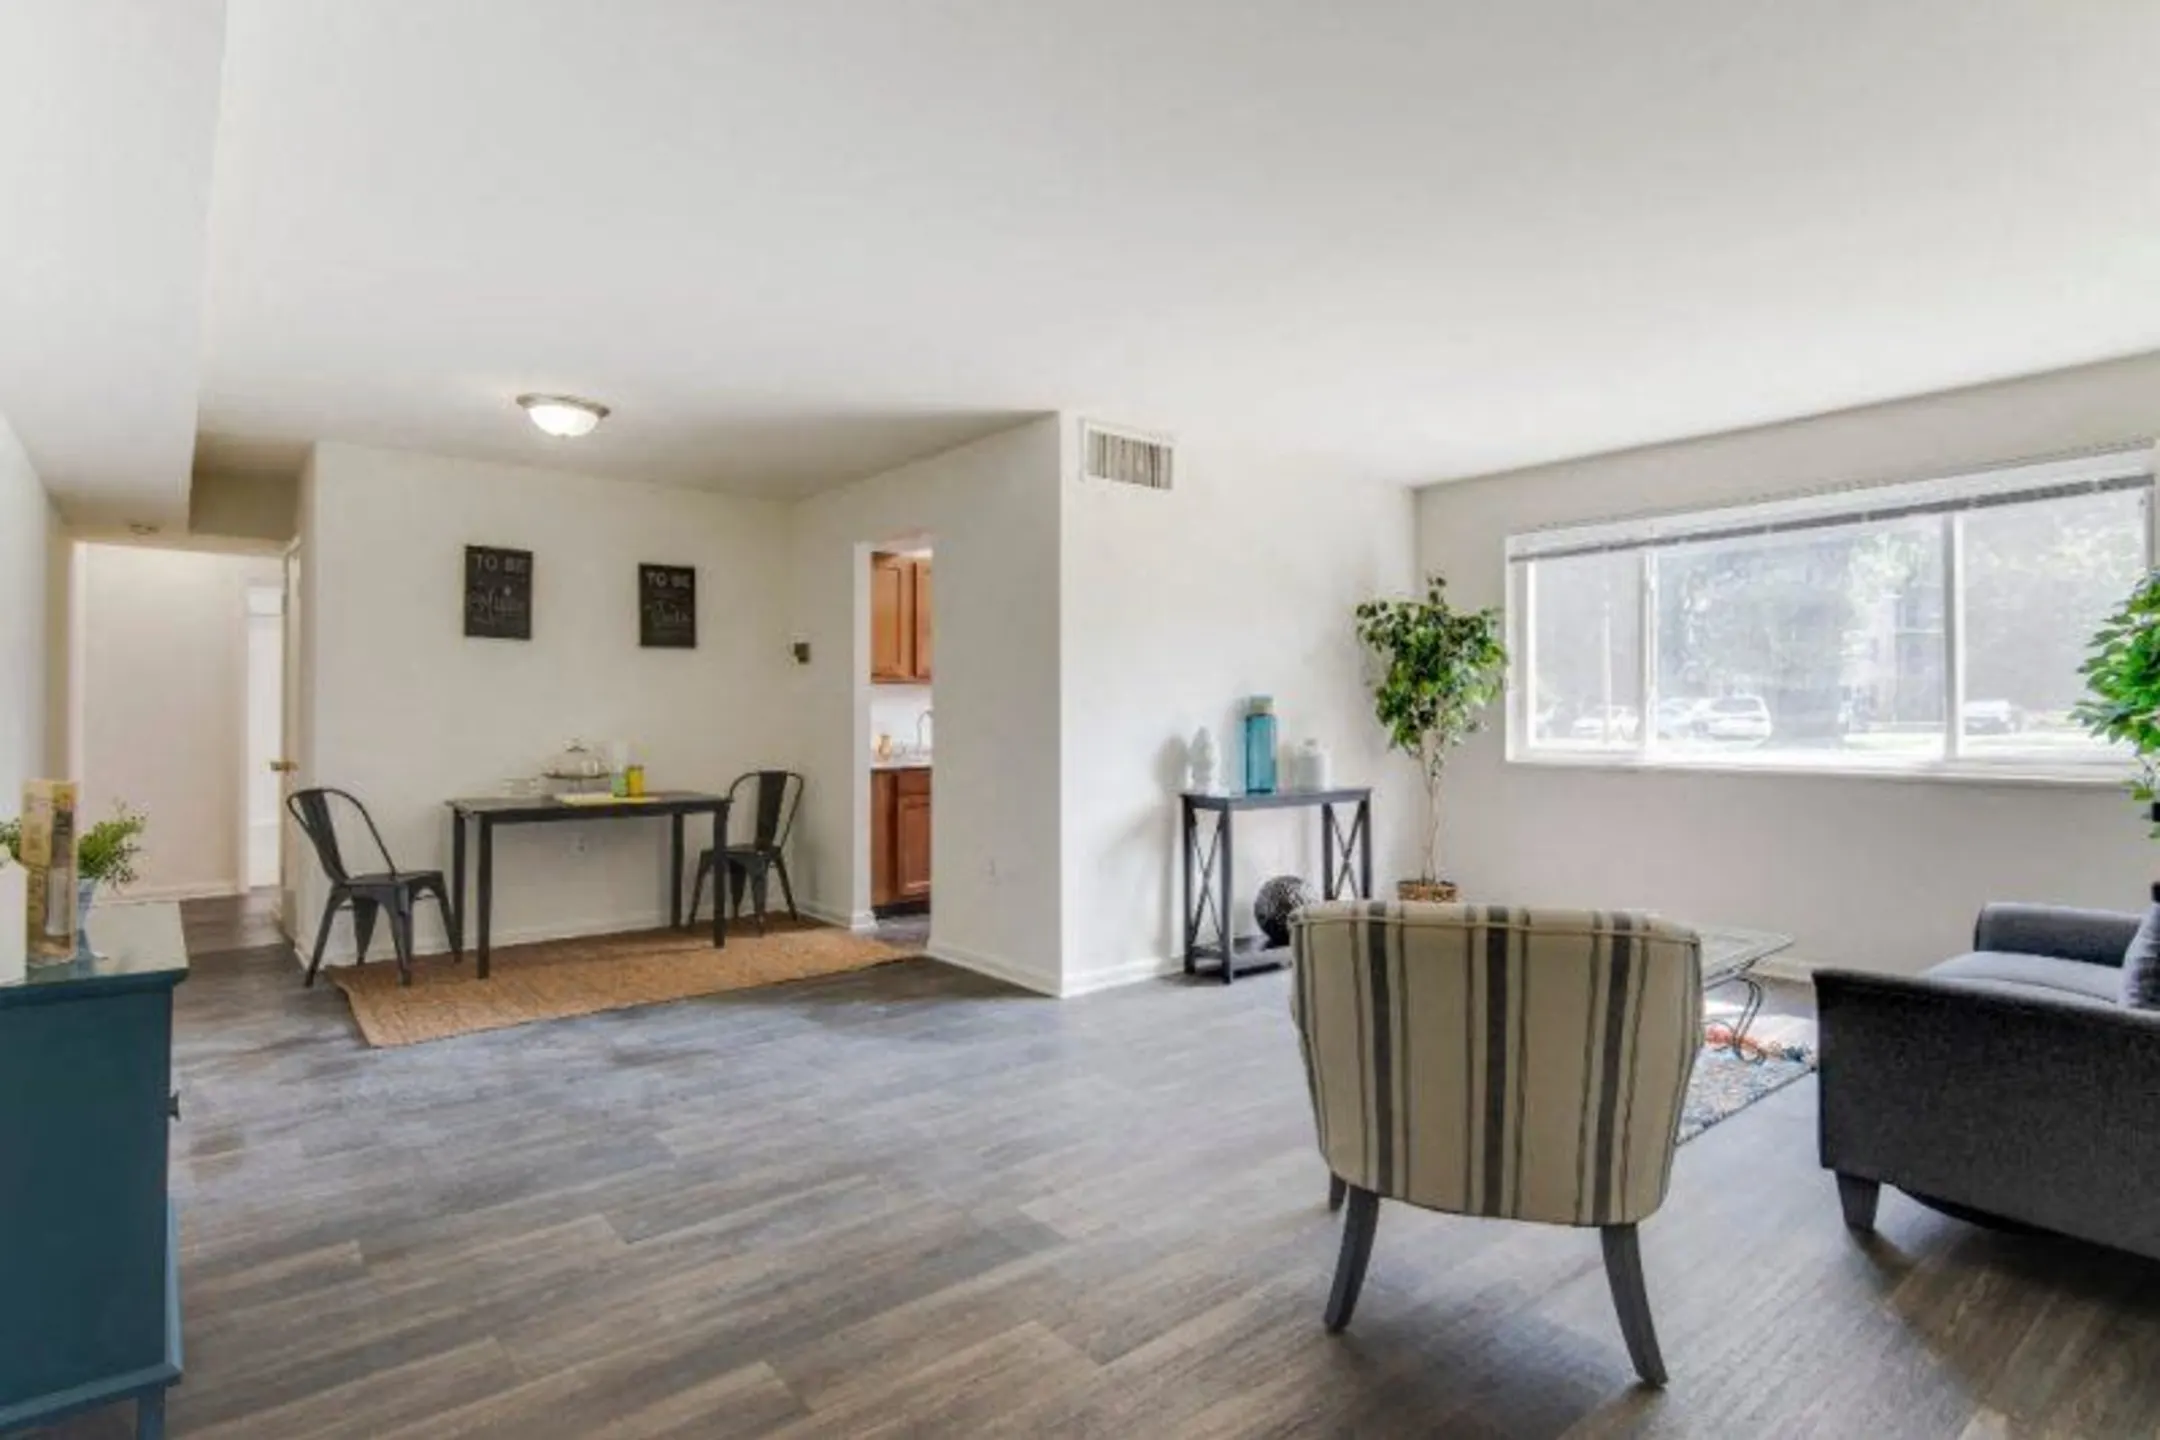 Living Room - Fairmont Gardens Apartments - Annandale, VA